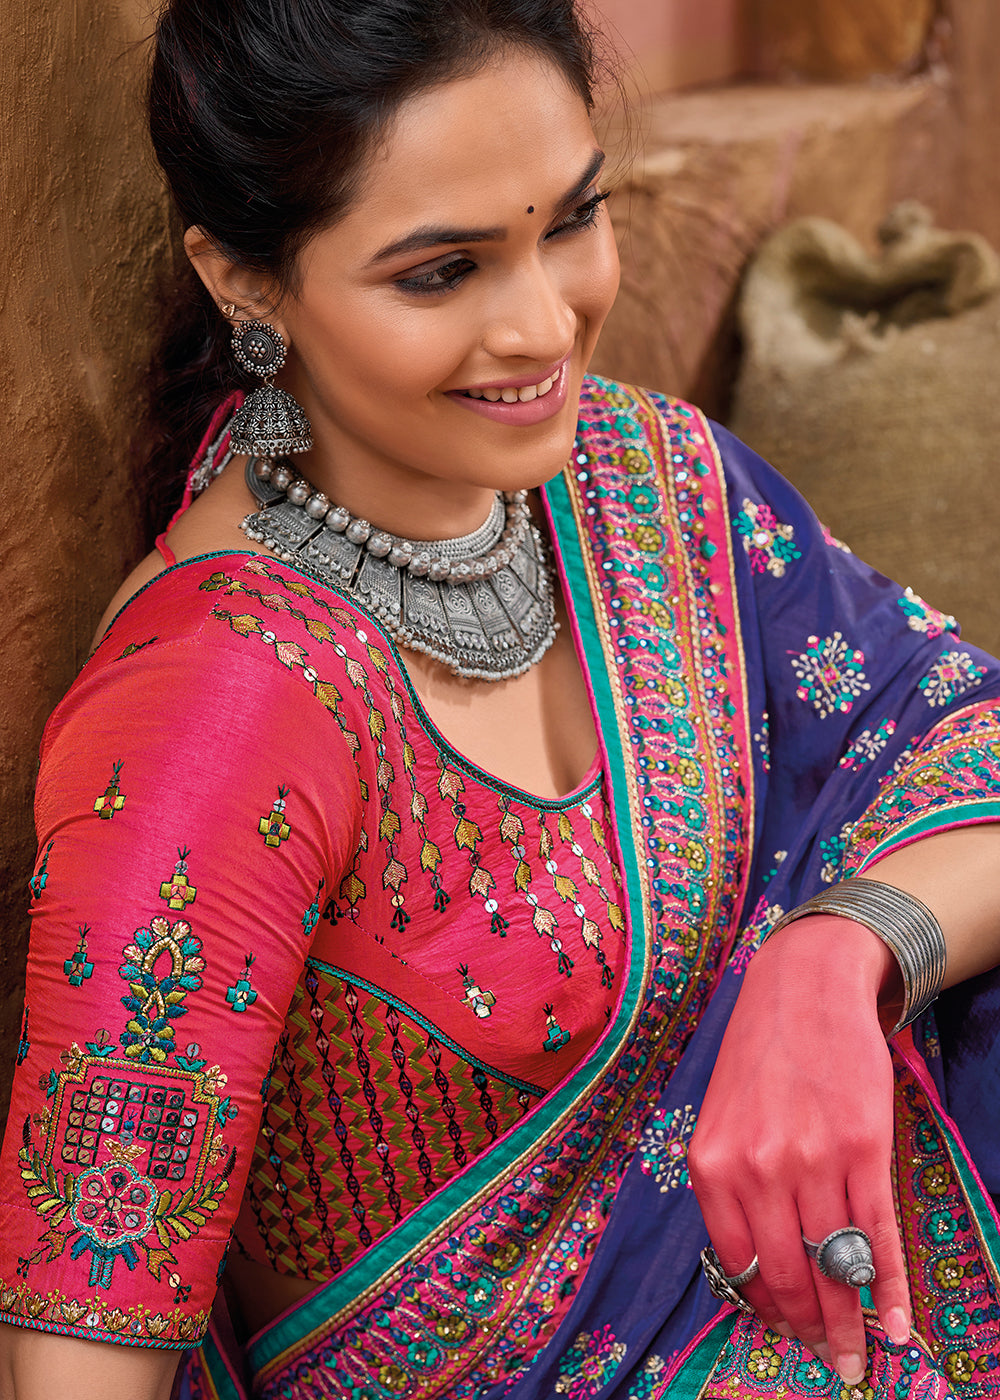 Mn Sarees Presents Kachhi Work Vol-2 5901-5905 Designer Indian Royal Party  Wedding Wear Saree At Wholesale Price 2574